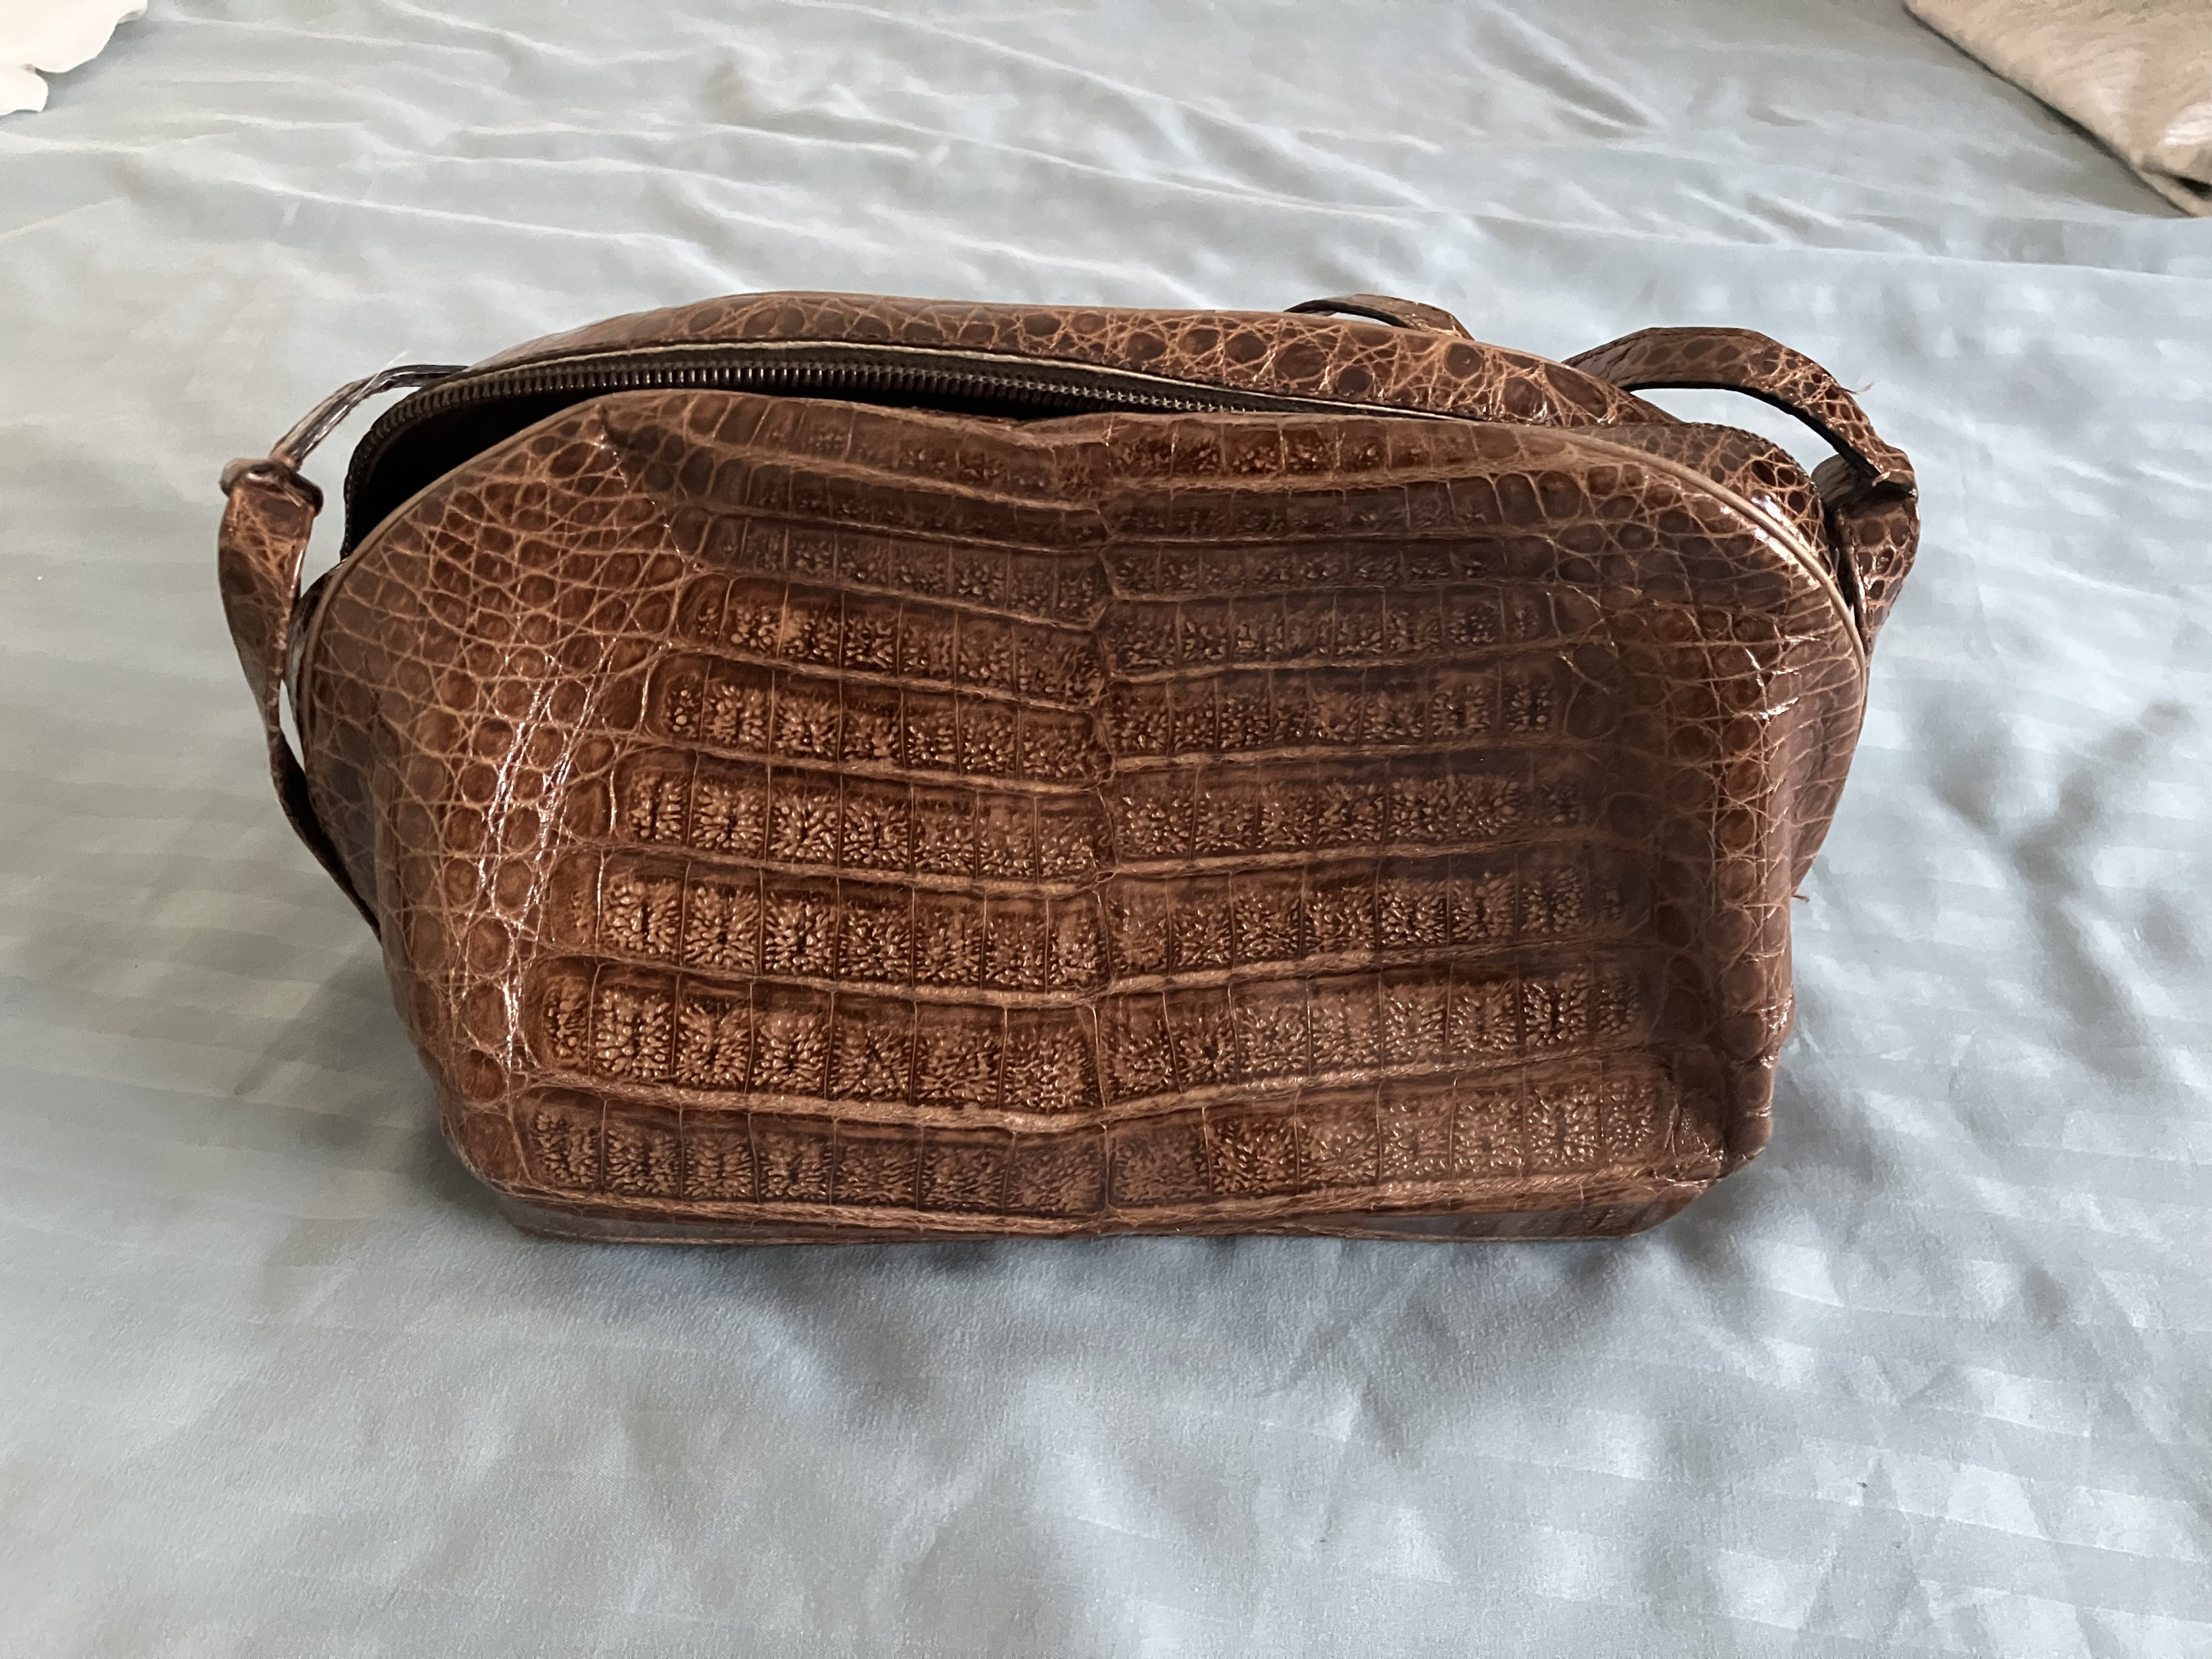 Beltrami vintage handbag